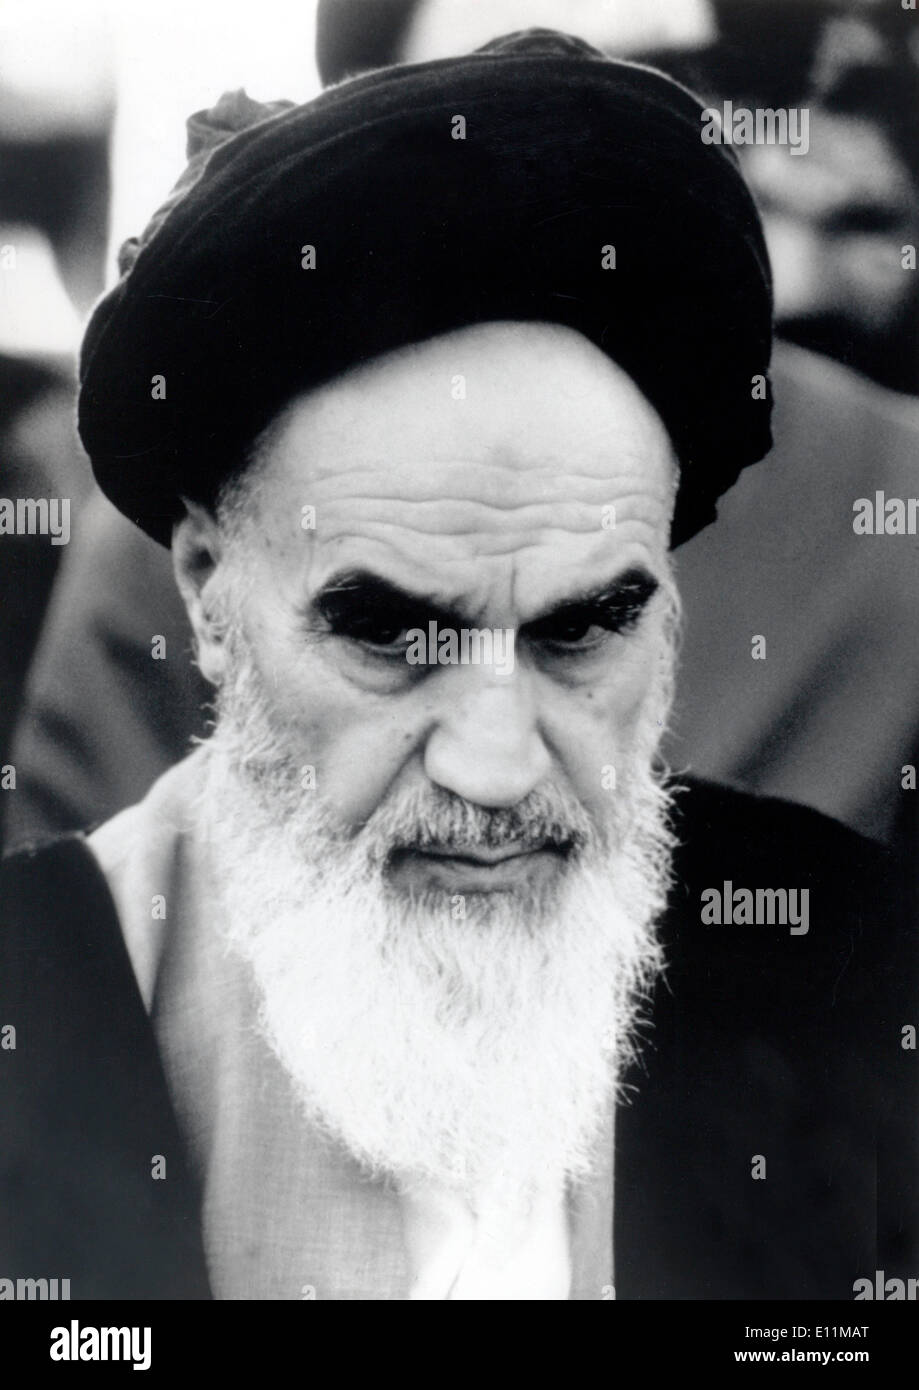 5200182 (900324) Ajatollah KHOMEINI, (24.09.1902 - 03.06.1989, Ruhollah Mussawi HENDI) iranischer Religionsf hrer und Stock Photo